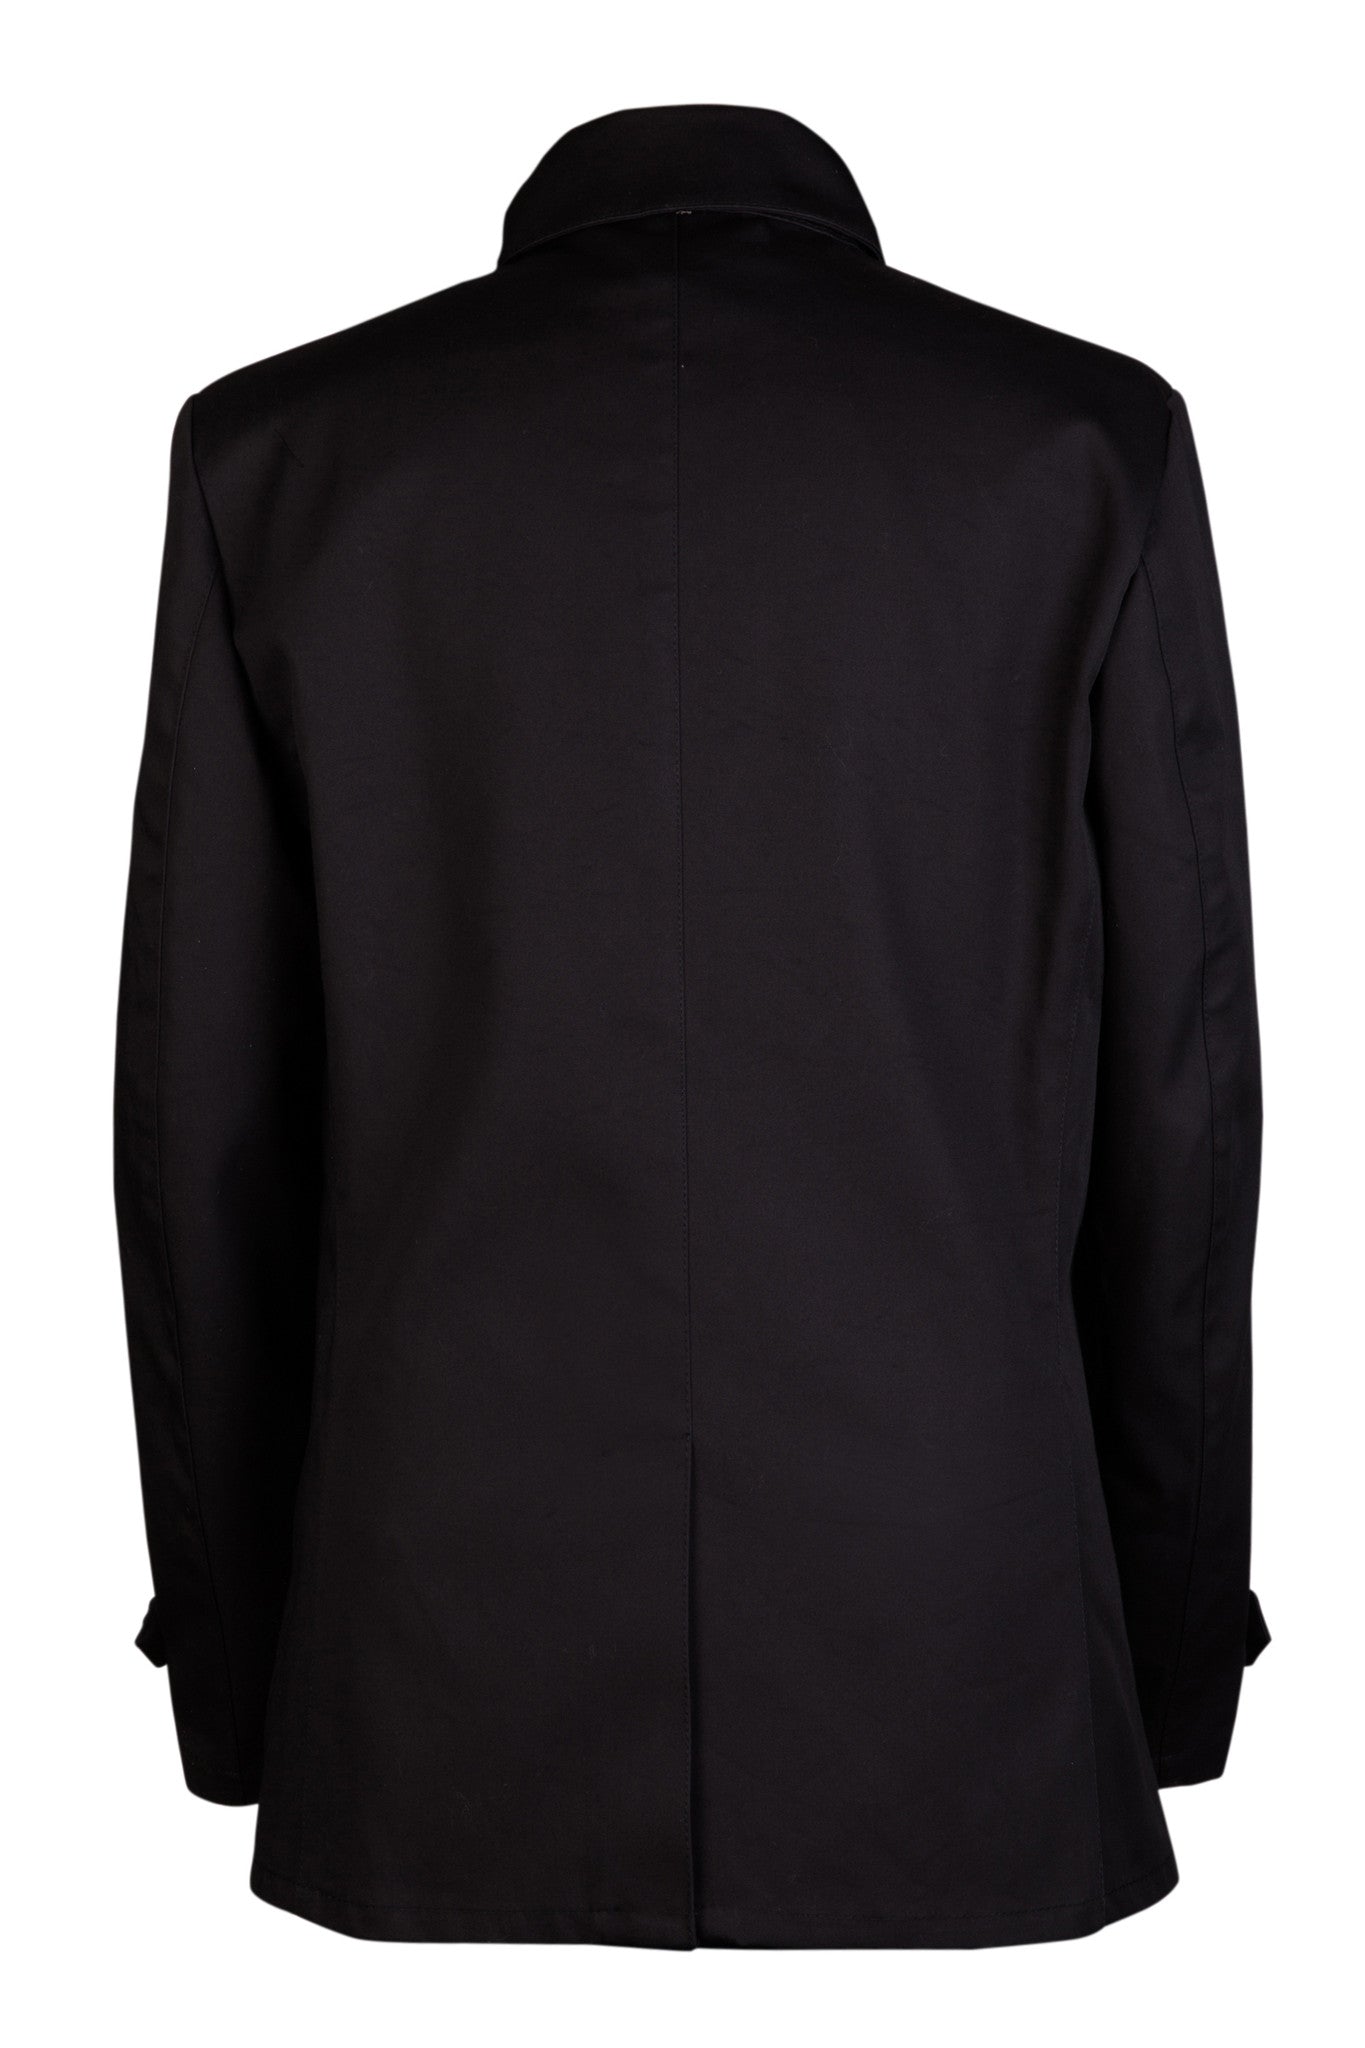 Black Double Breasted Pea Coat Cotton Men's Raincoat